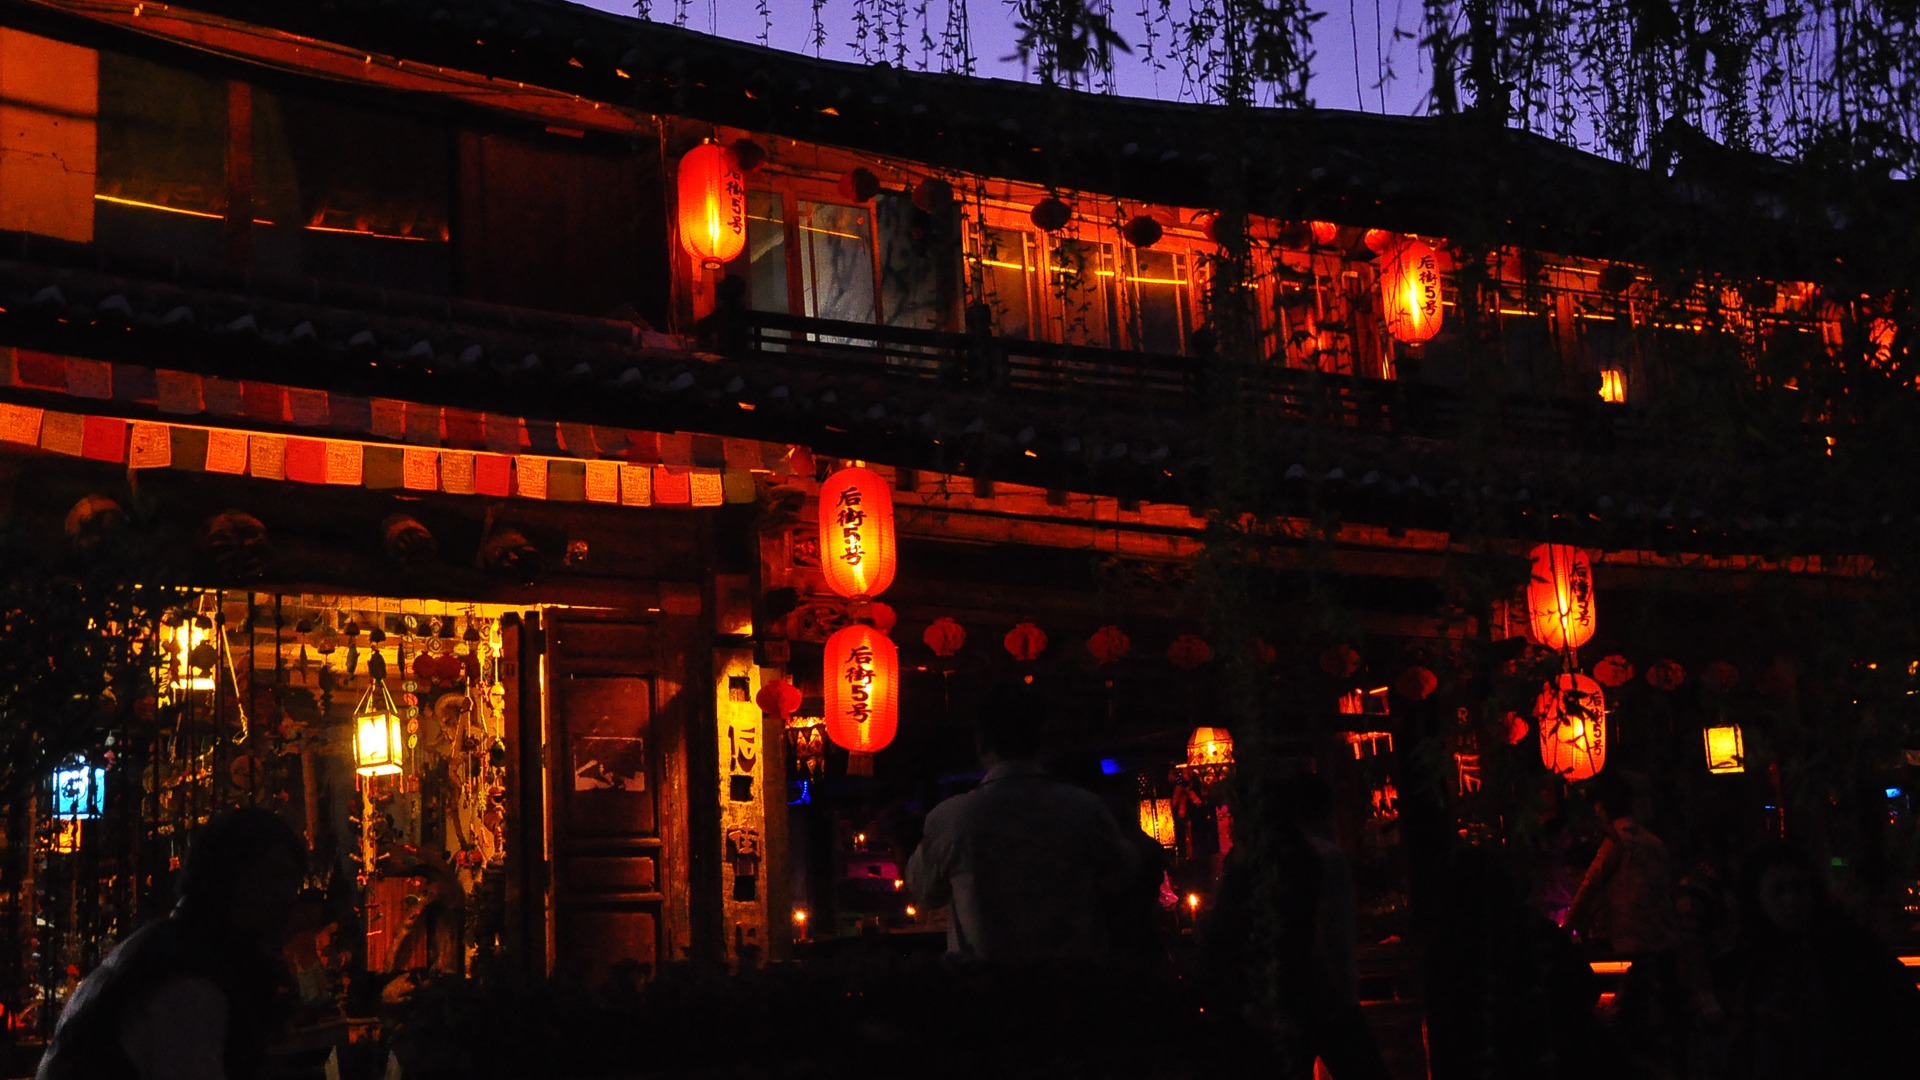 Lijiang Ancient Town Night (Old Hong OK works) #21 - 1920x1080